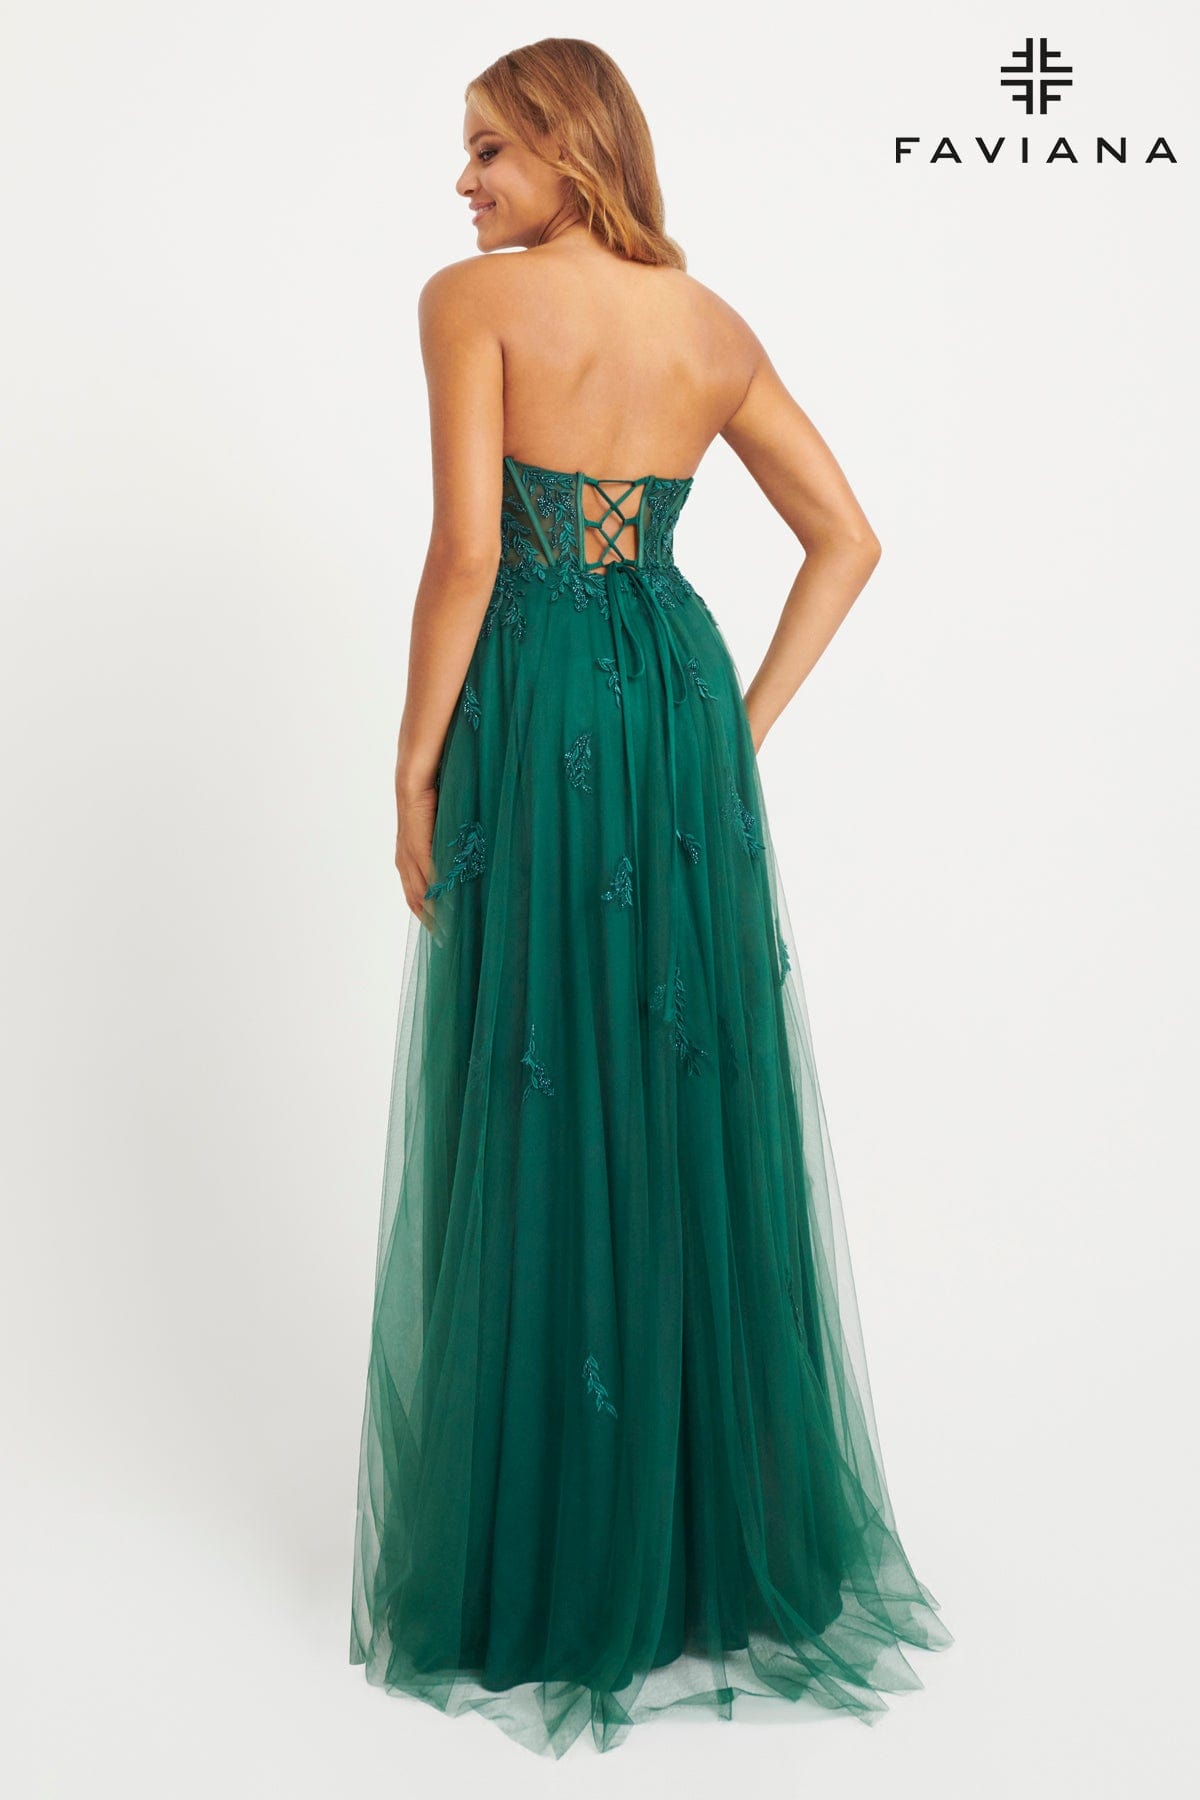 Green & Emerald Prom Dresses